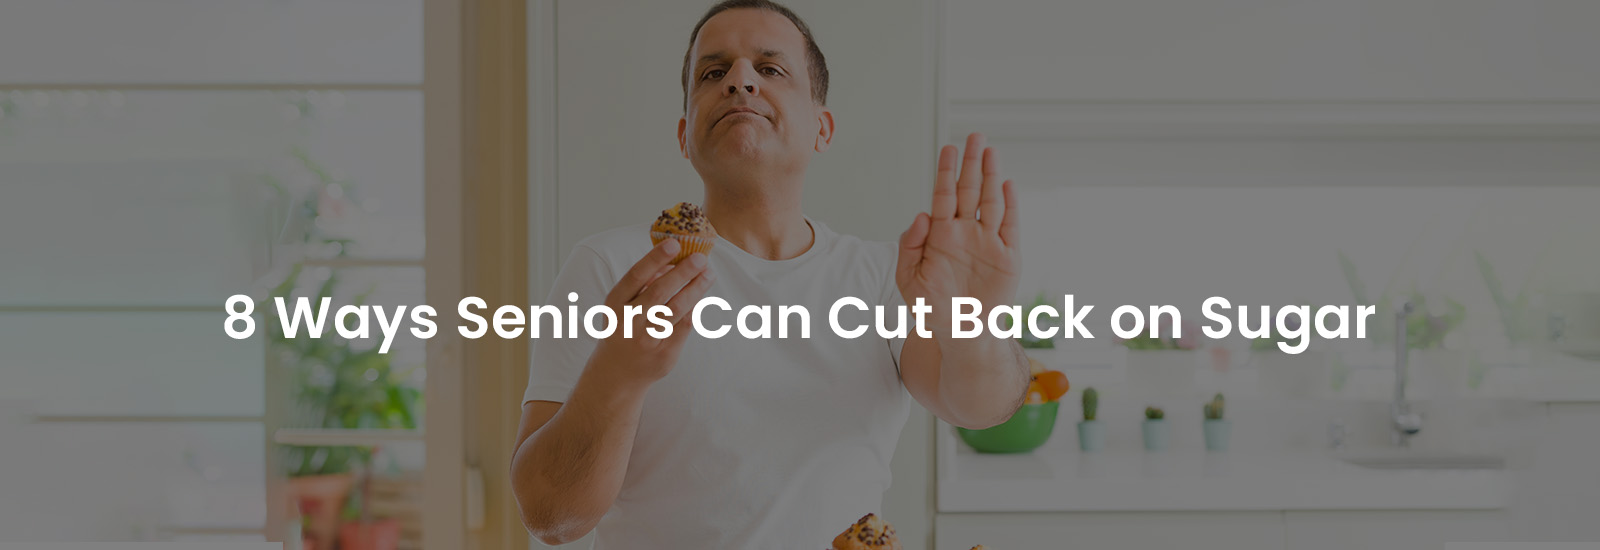 8 Ways Seniors Can Cut Back on Sugar | Banner Image